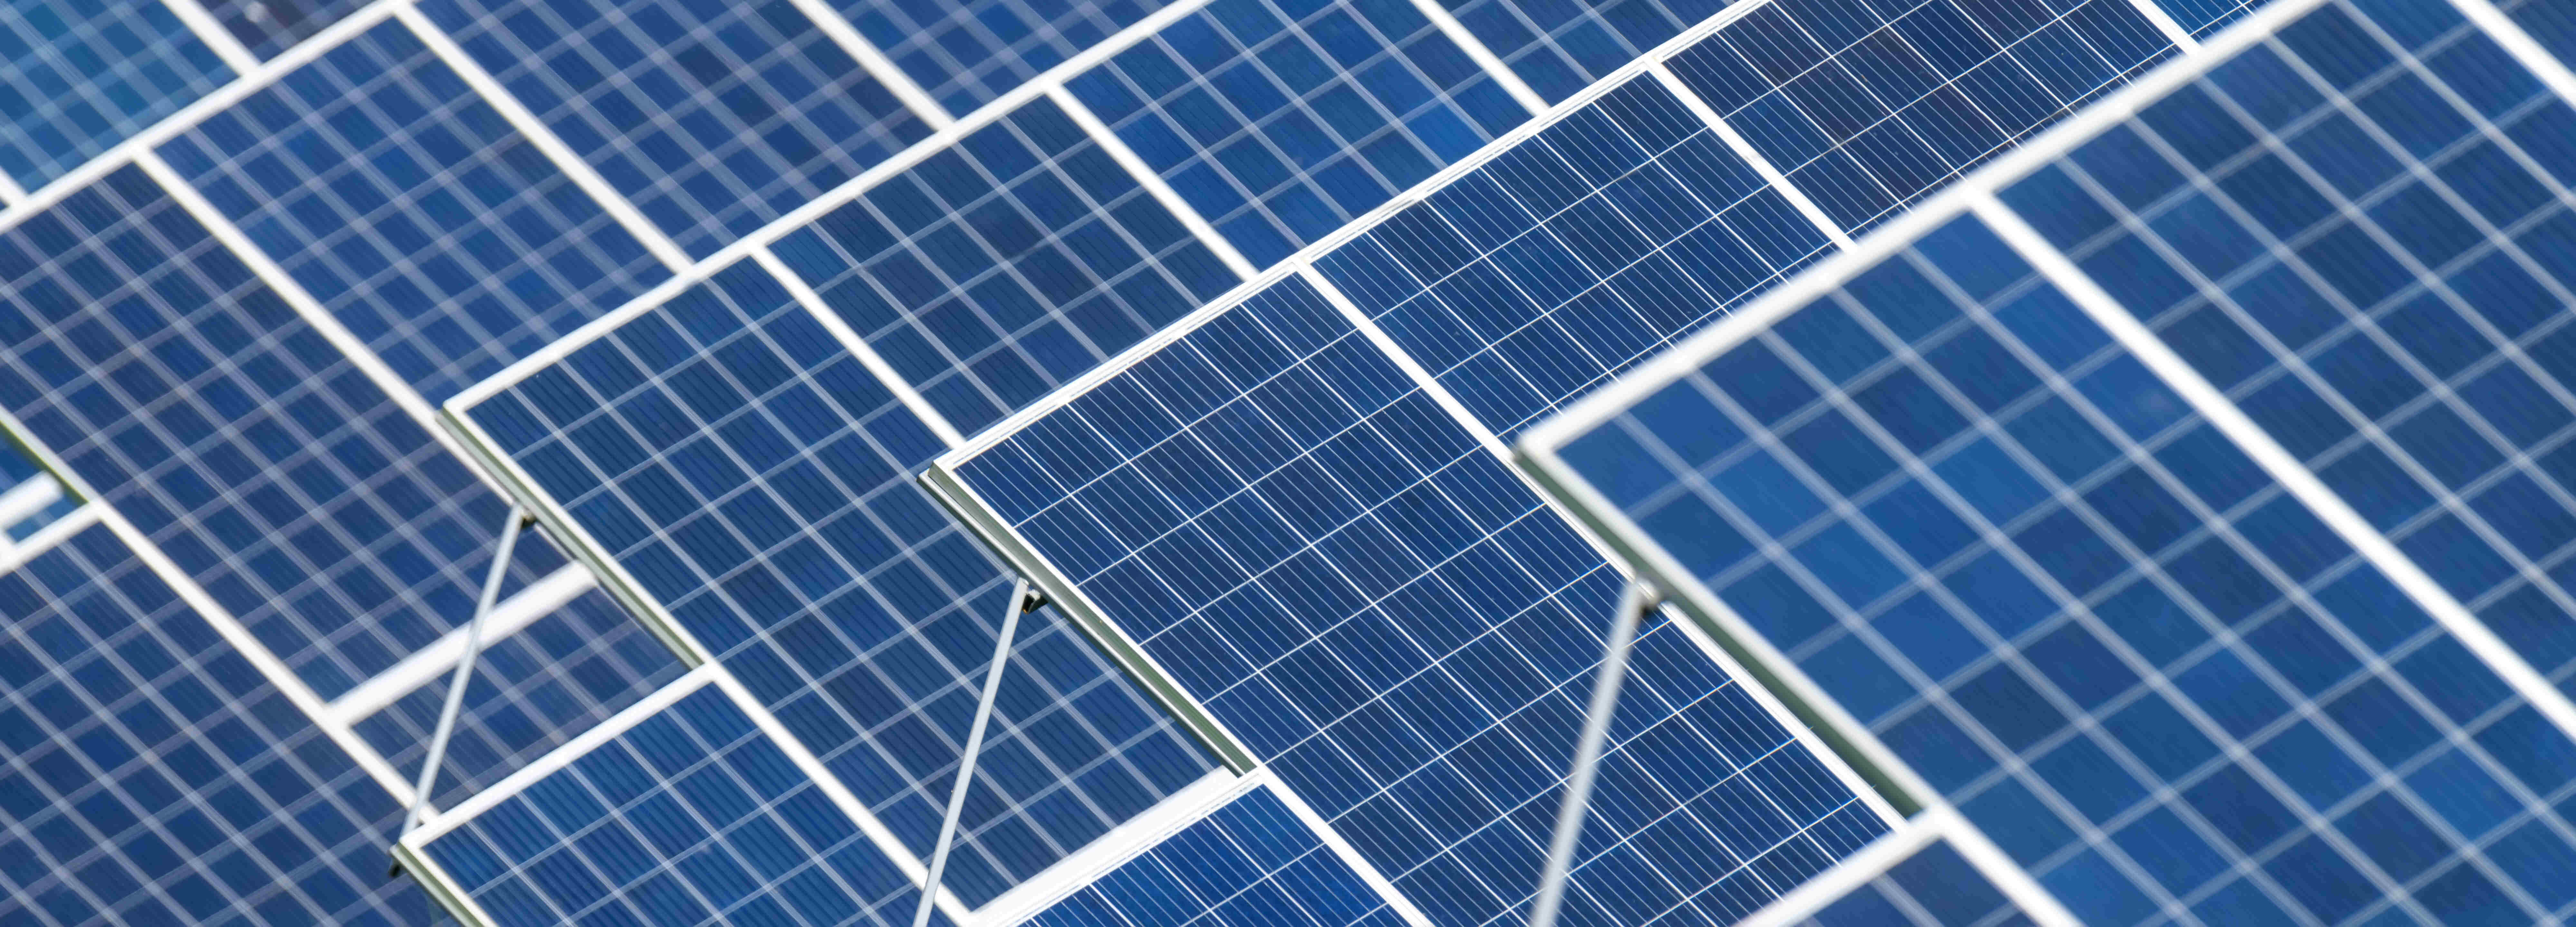 4 mitos e 3 verdades sobre a energia solar